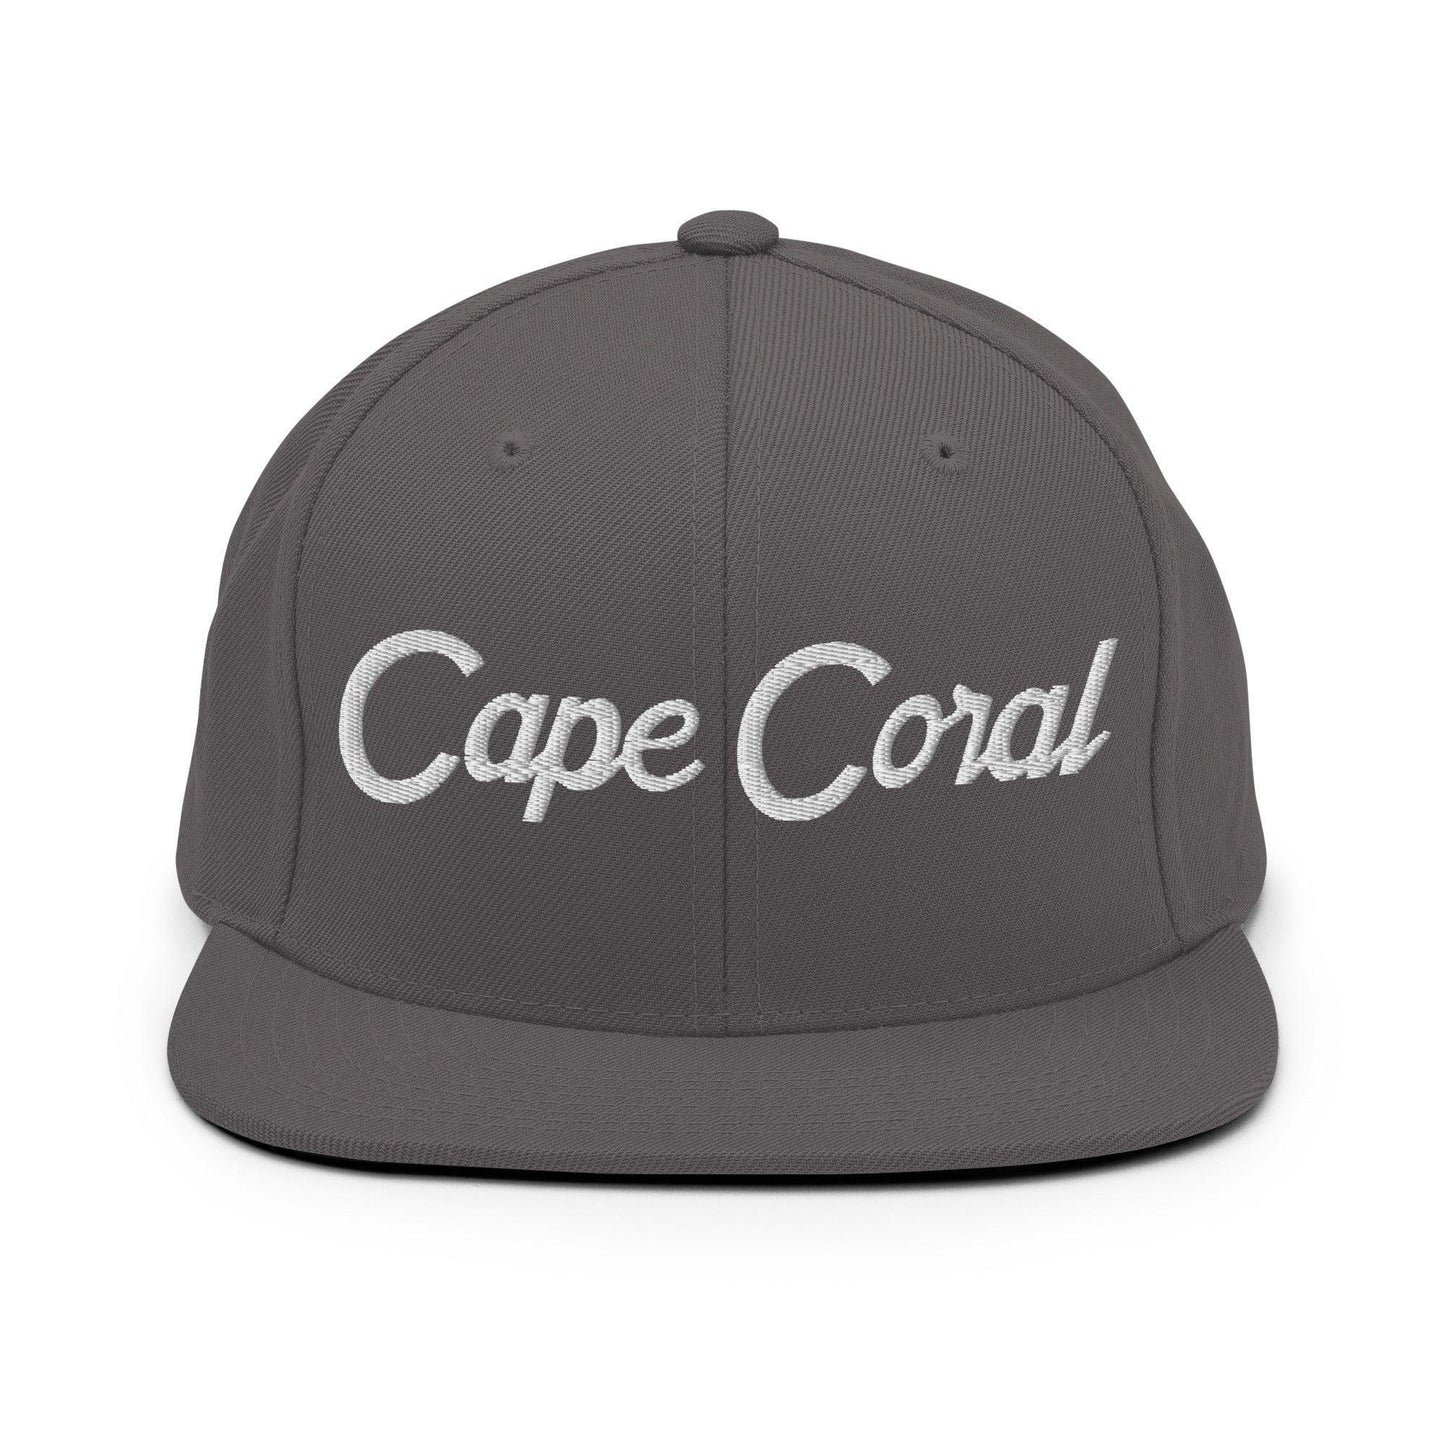 Cape Coral Script Snapback Hat Dark Grey